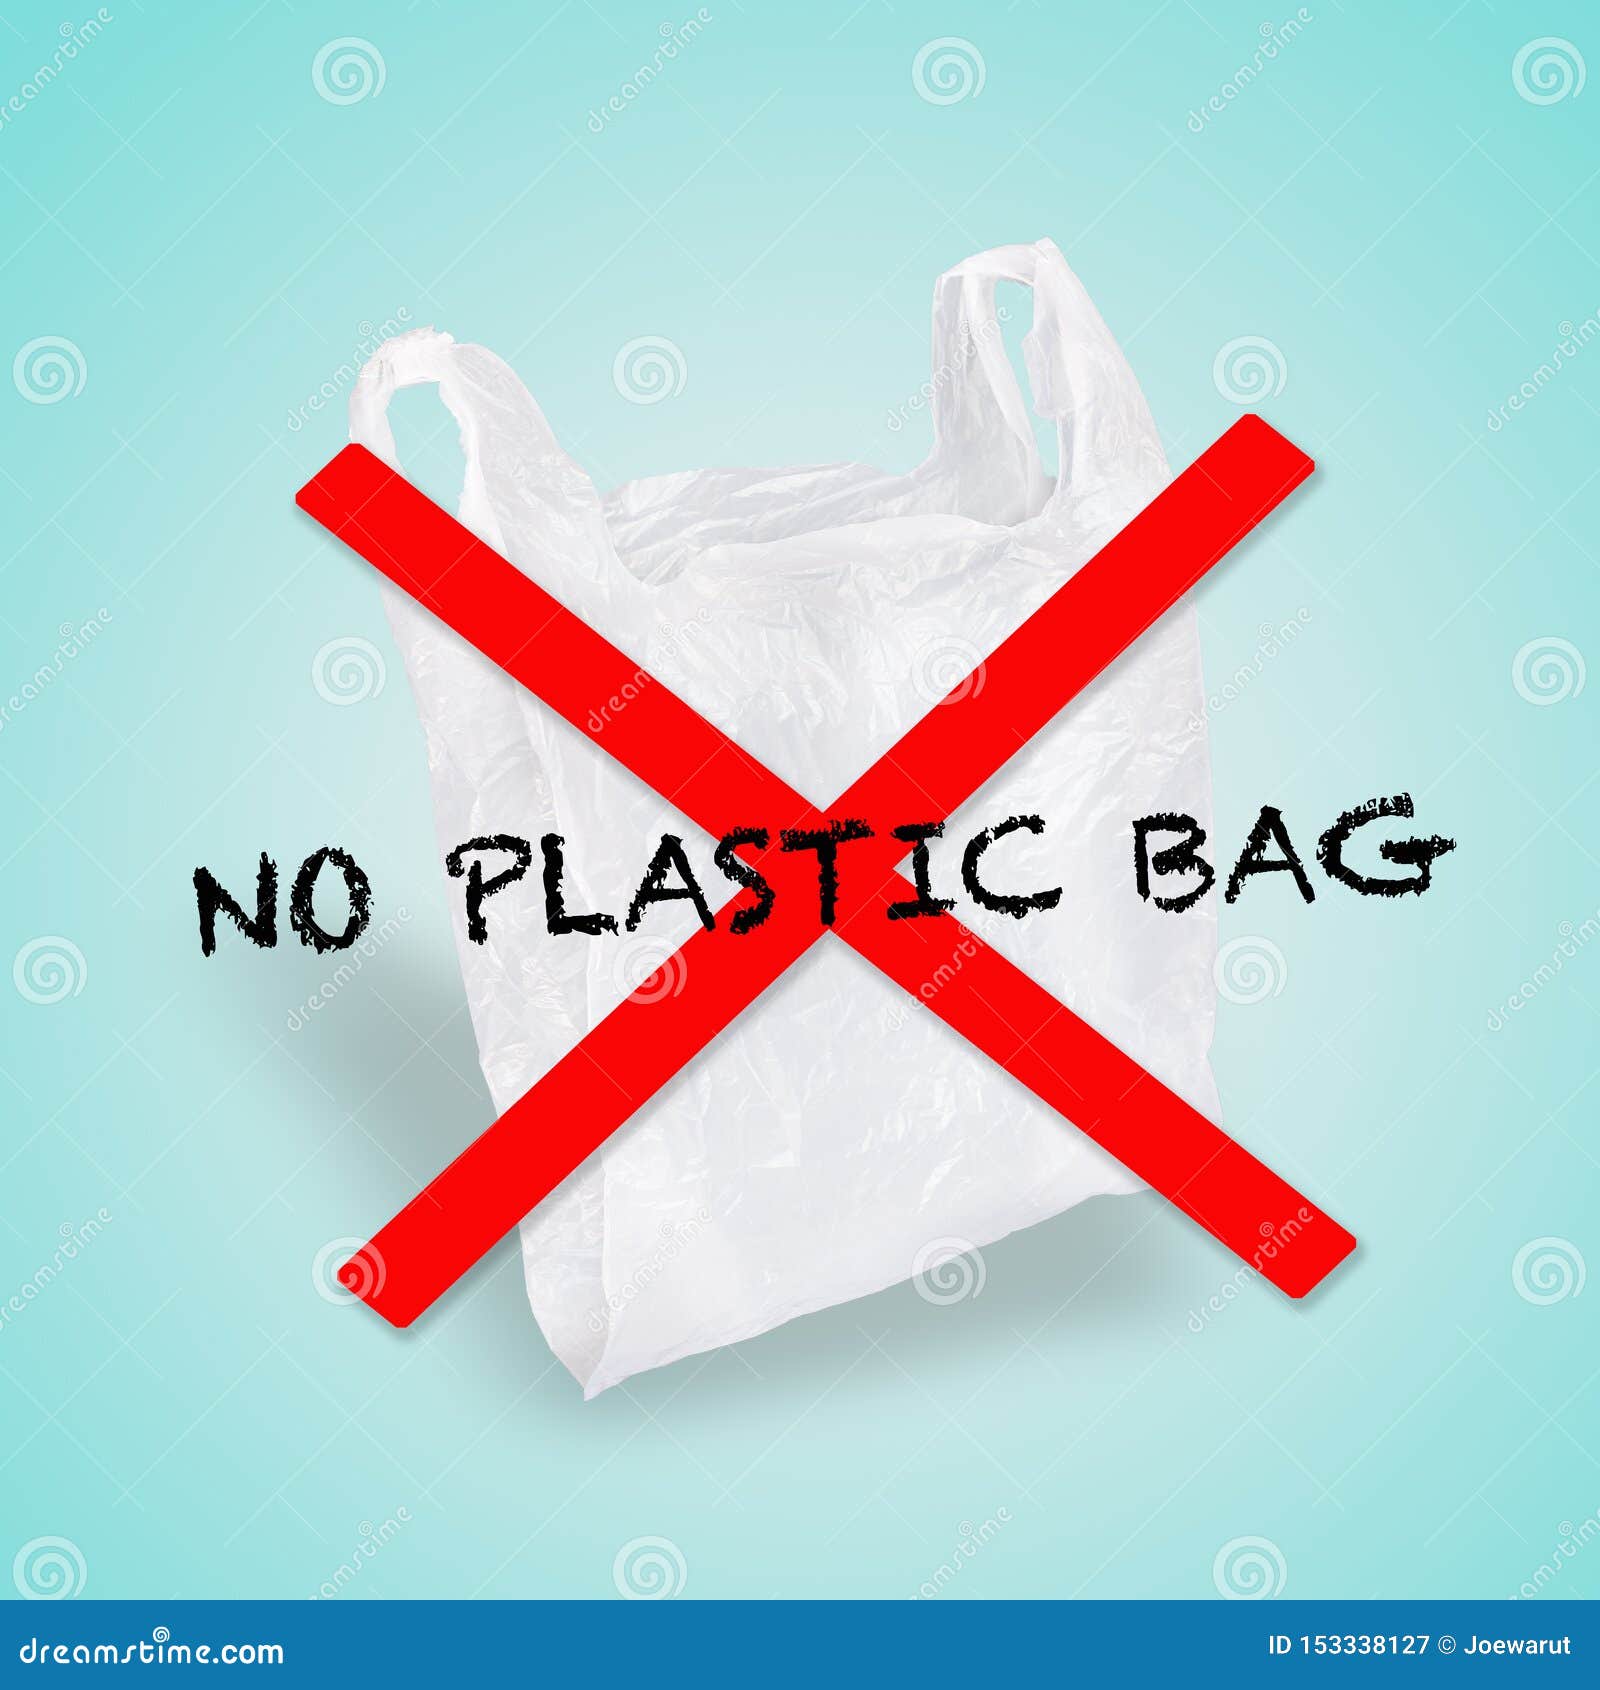 No Plastic bag stock image. Image of sign, cross, forbidden - 153338127